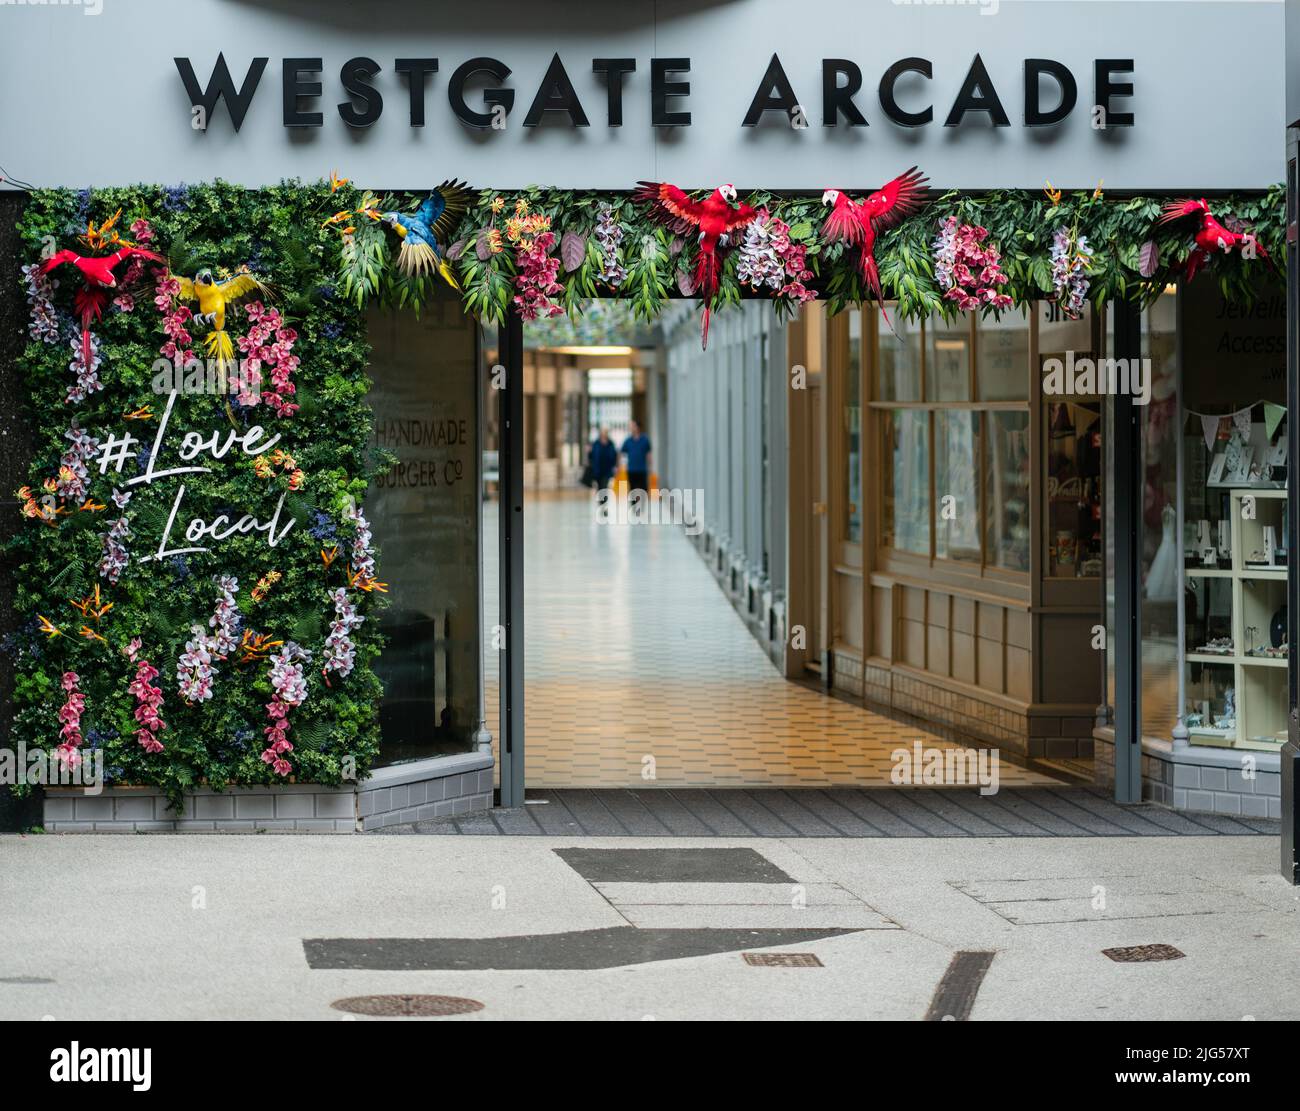 Ingresso al centro commerciale Westgate Arcade Foto Stock